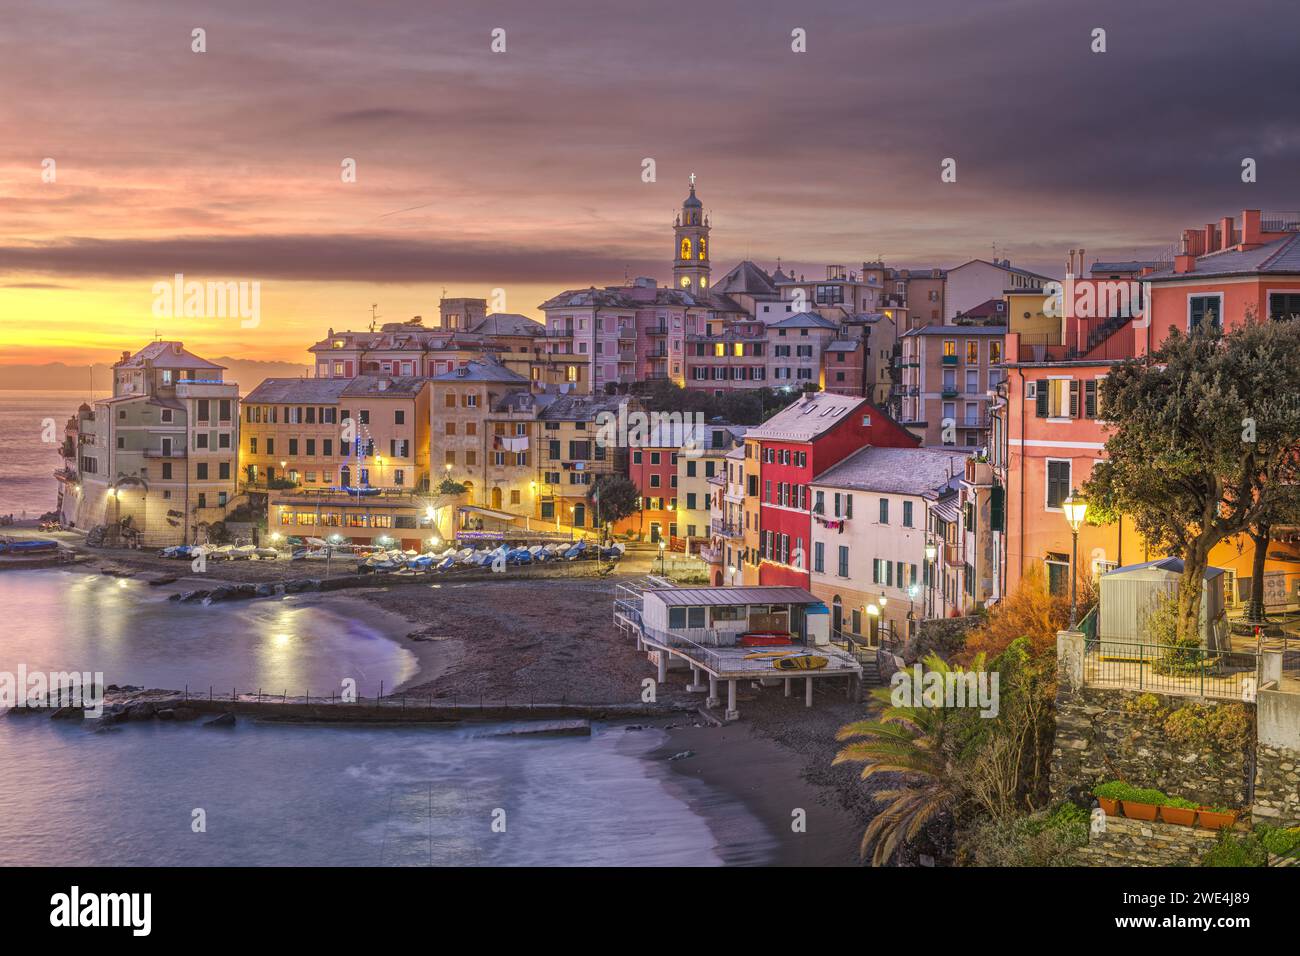 Bogliasco, Genoa, Italy town on the Mediterranean Sea at sunset. Stock Photo